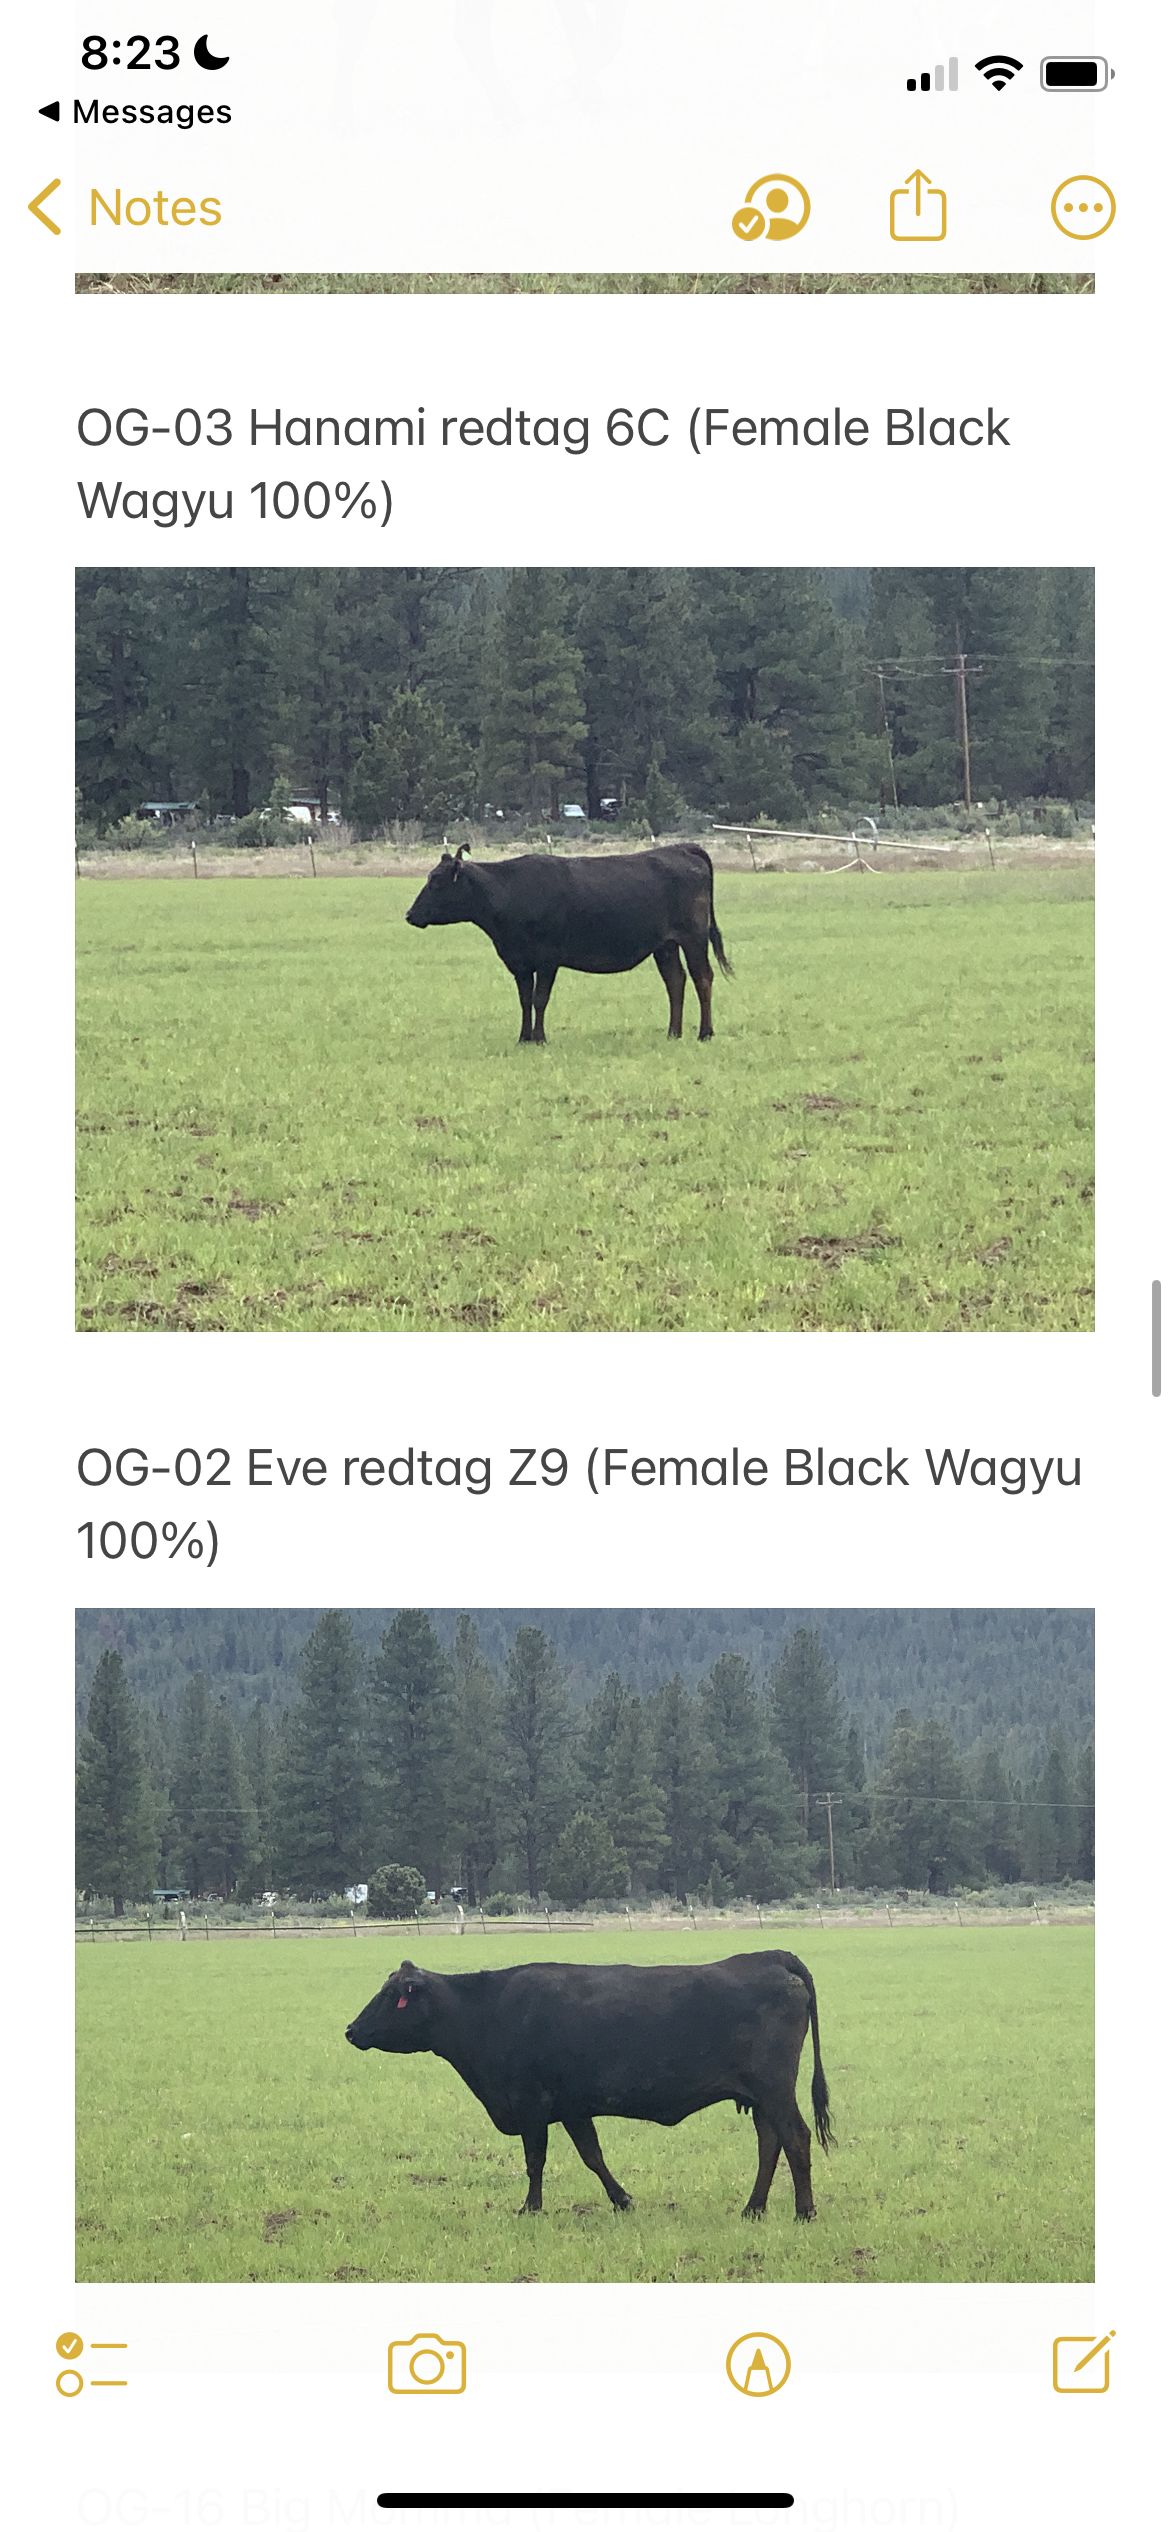 Wagyu cows